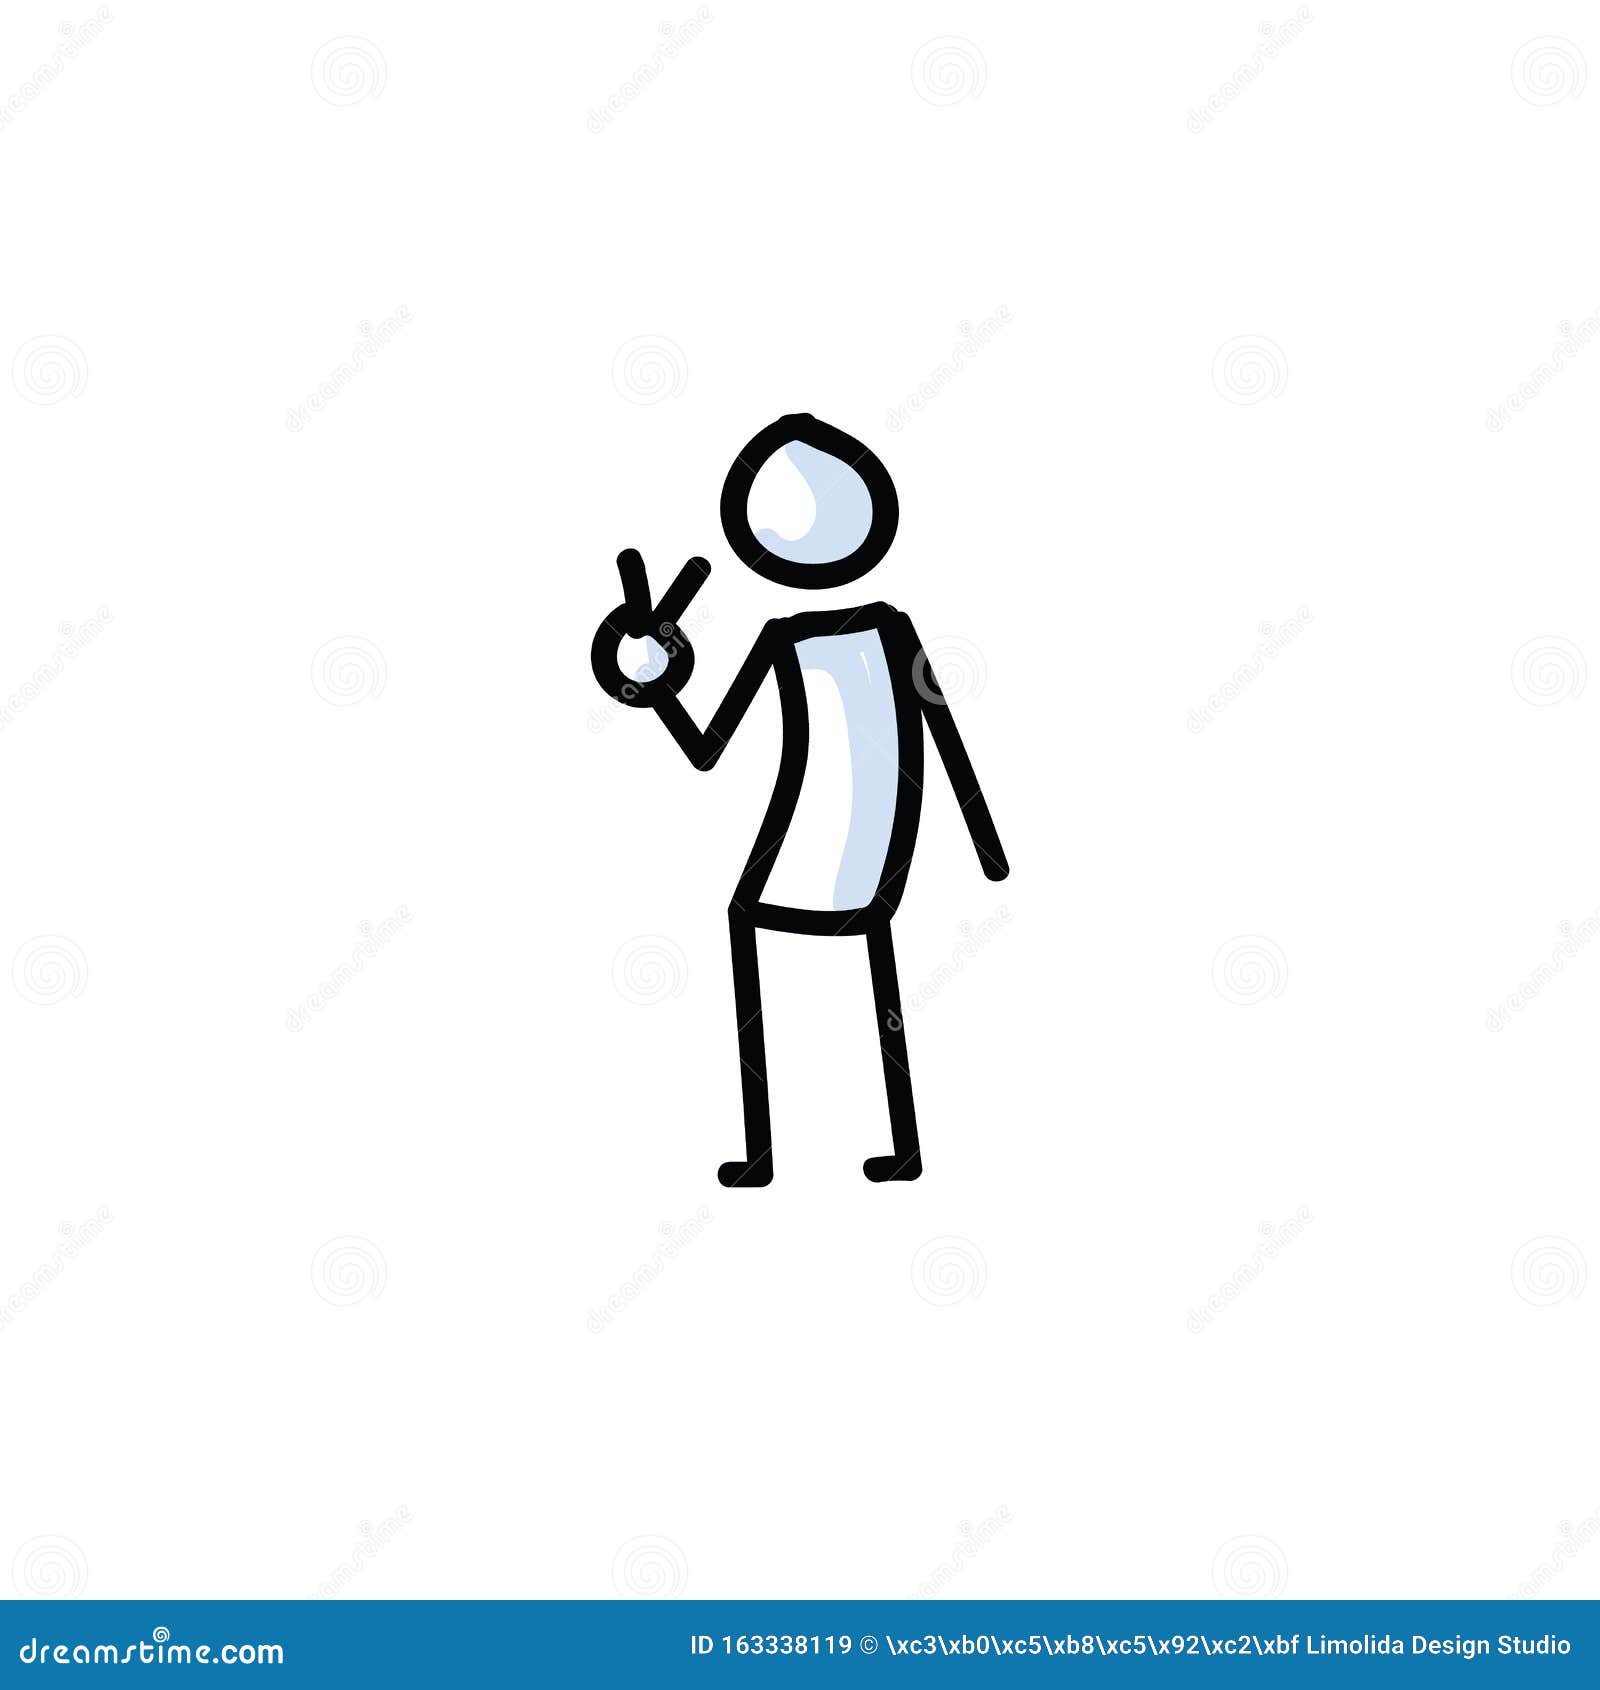 https://thumbs.dreamstime.com/z/peace-sign-stick-figure-vector-illustration-hand-drawn-v-victory-journal-bullet-stickman-gesture-clipart-163338119.jpg